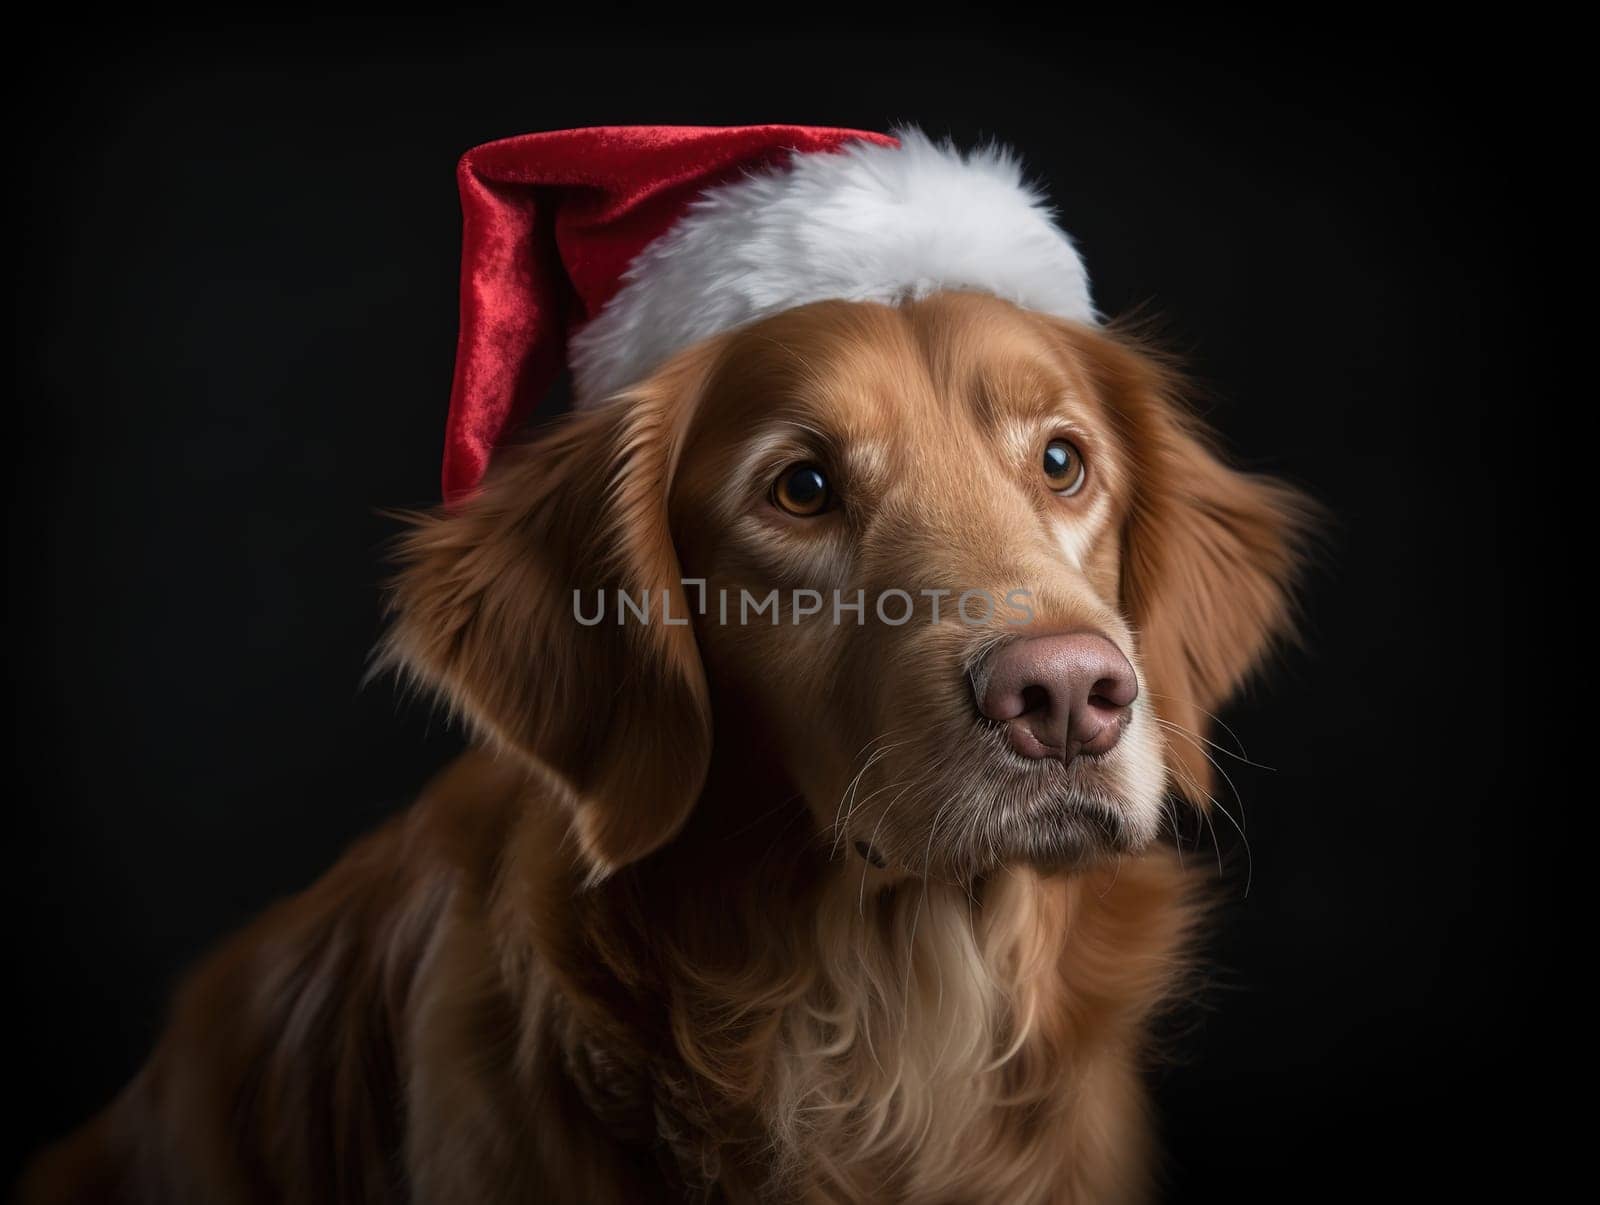 Christmas Portrait Of A Golden Retriever Dog In A Santa Hat Captures The Festive Spirit by GekaSkr